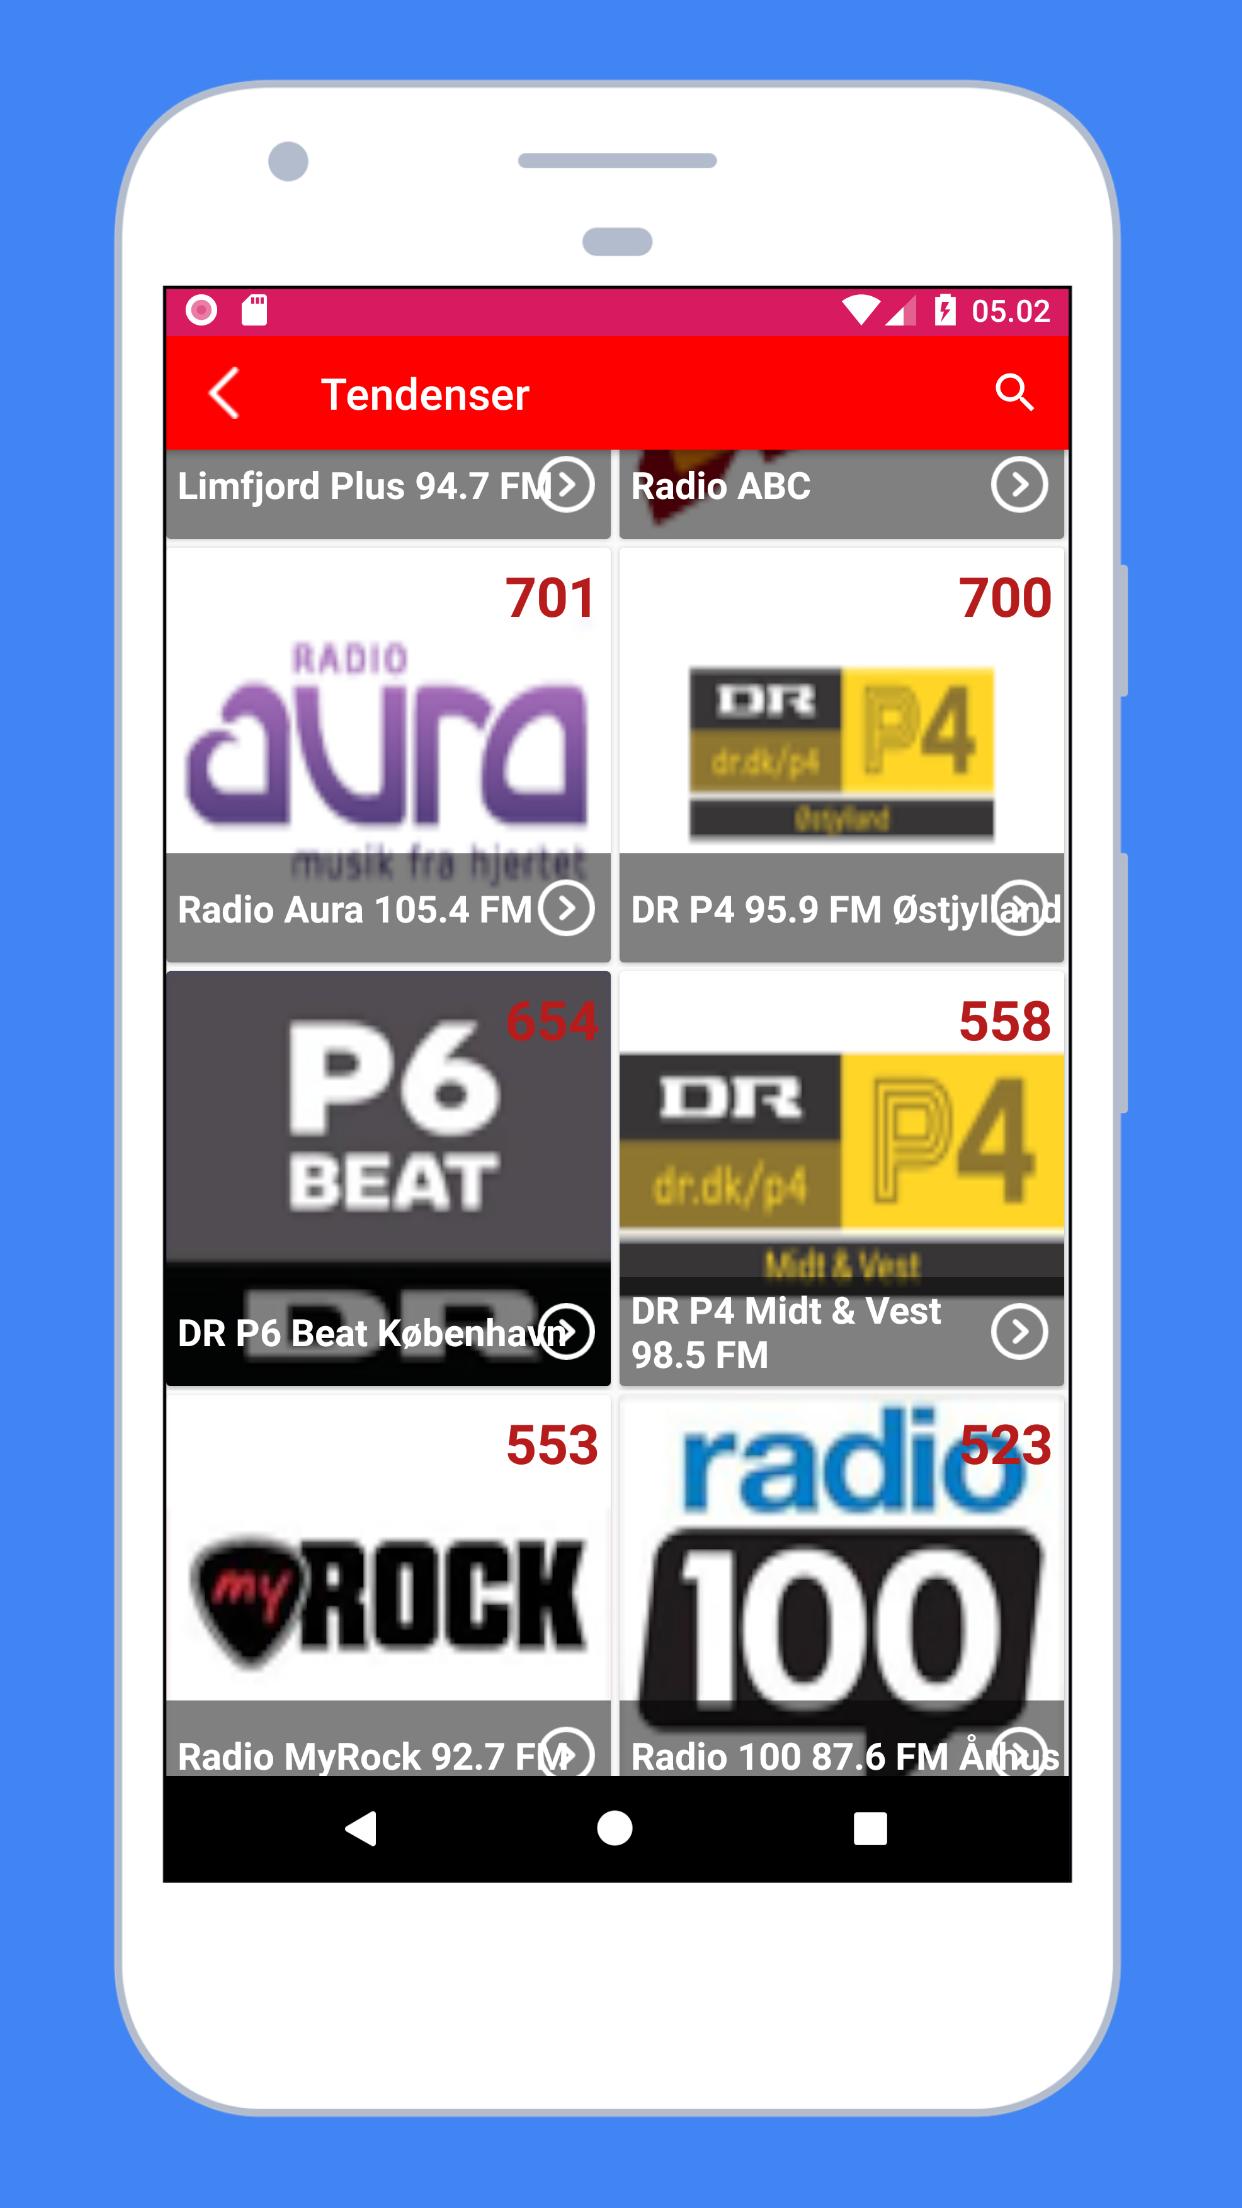 Radio Denmark - Radio Denmark FM: DAB Radio DK App for Android - APK  Download